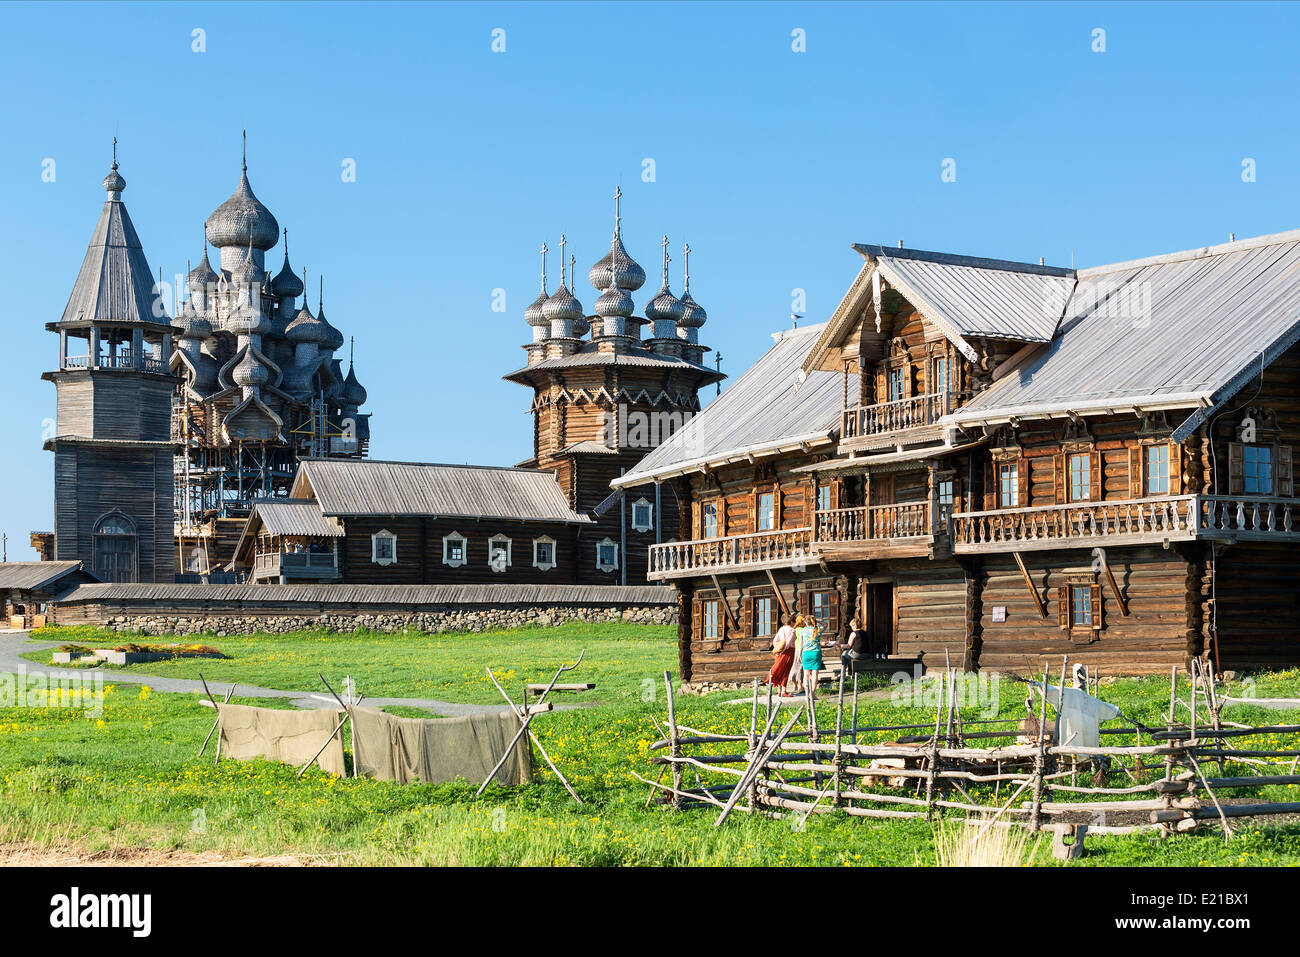 Russia, Kizhi Island Stock Photo